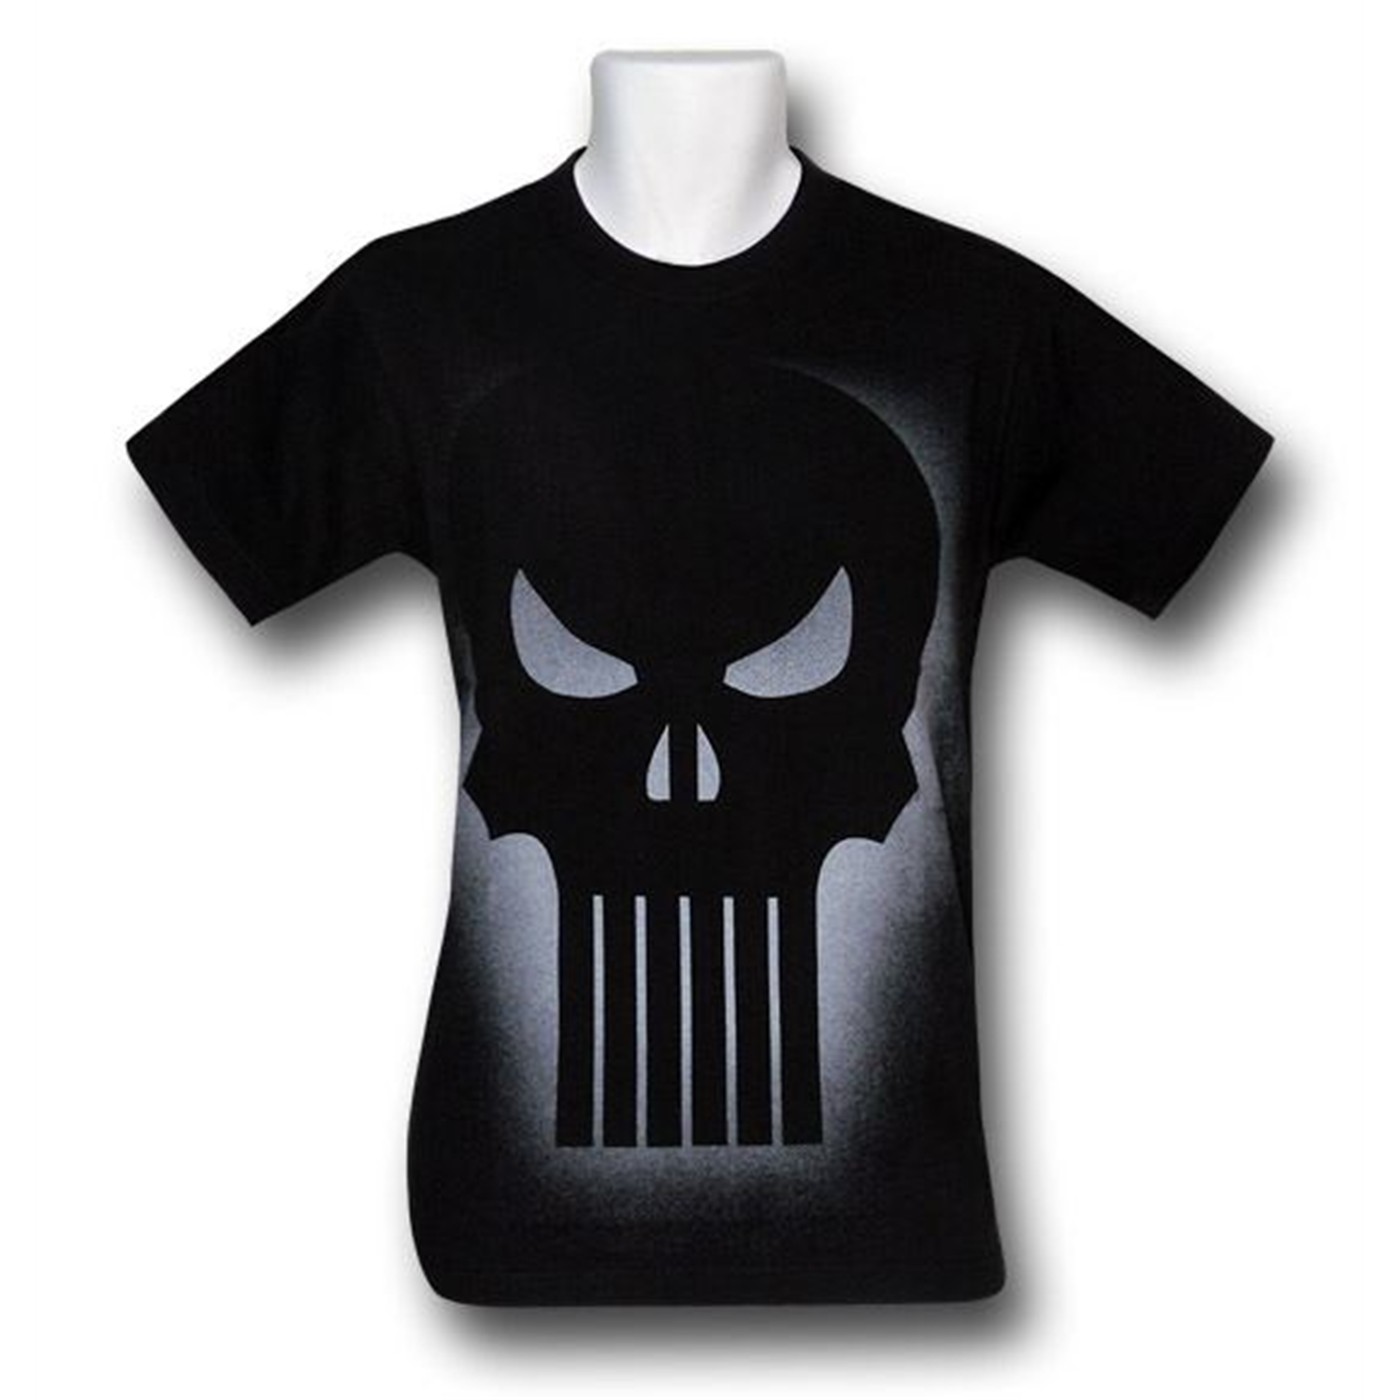 Punisher Silver Lit Skull Symbol T-Shirt